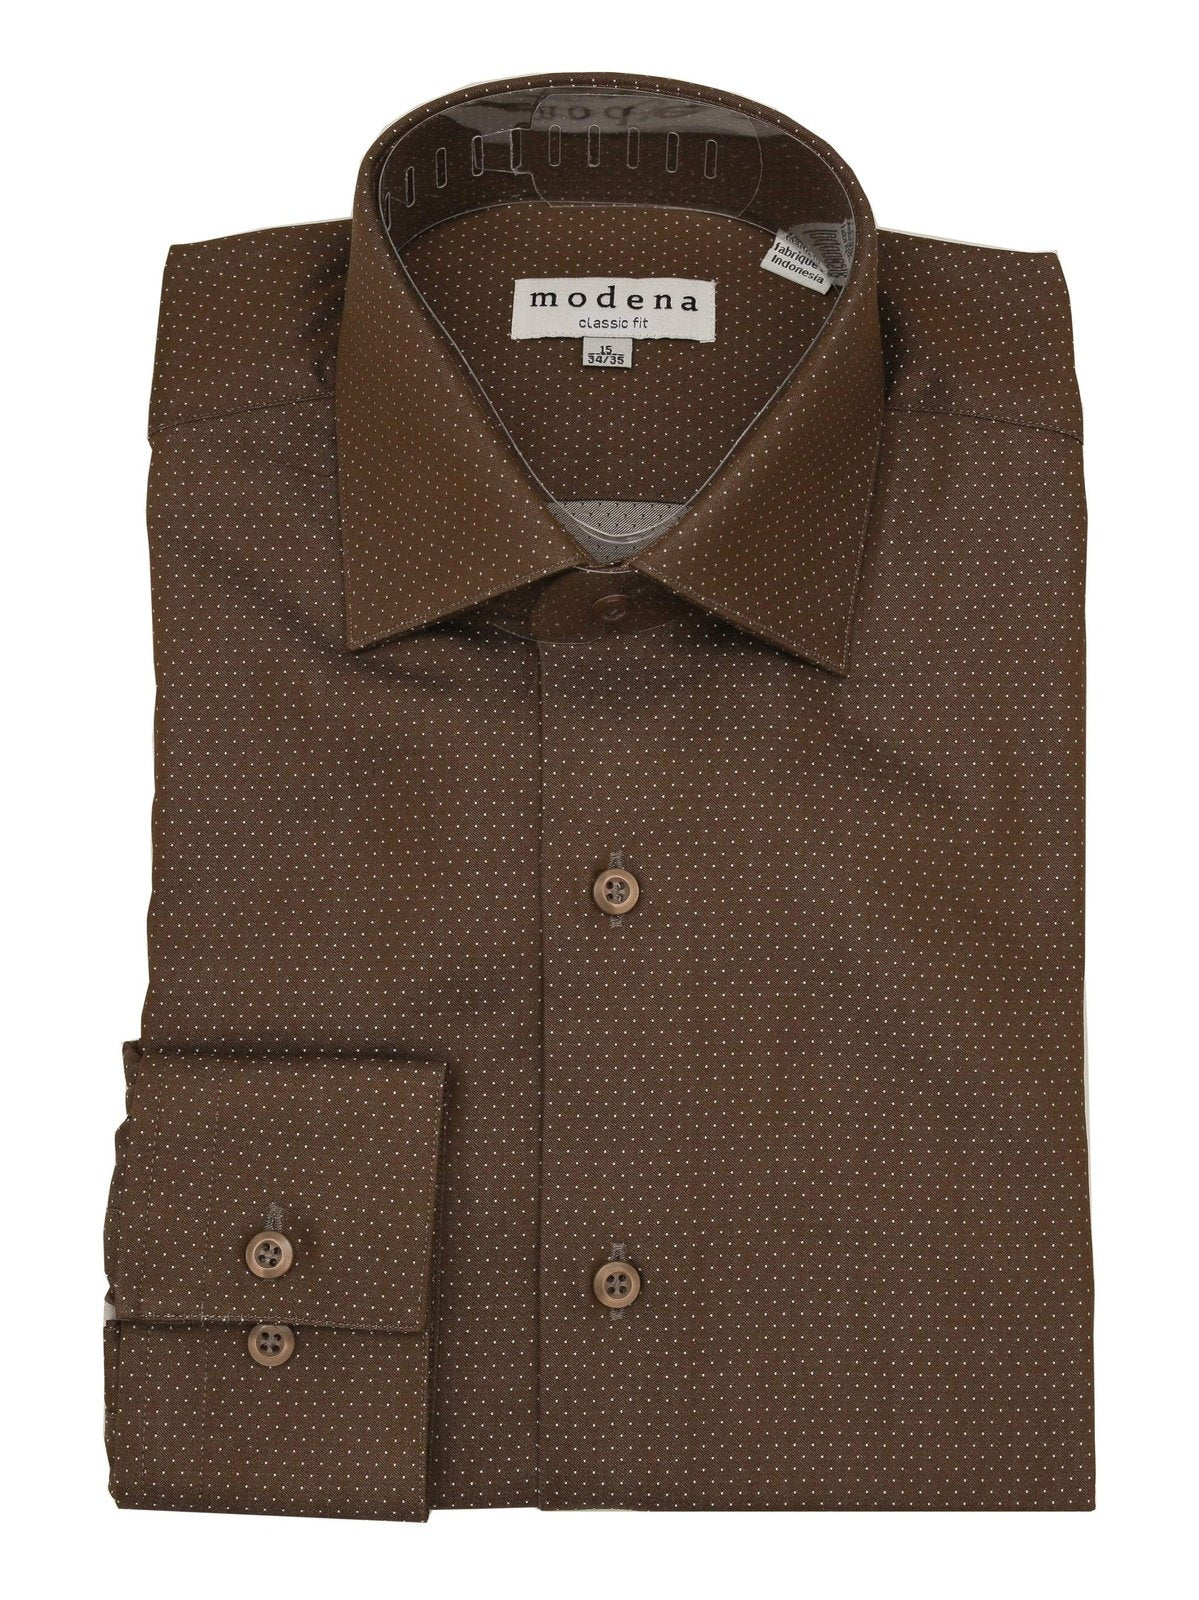 Brand M SHIRTS Men's Classic Fit Brown & White Polka Dot Cutaway Collar Cotton Dress Shirt